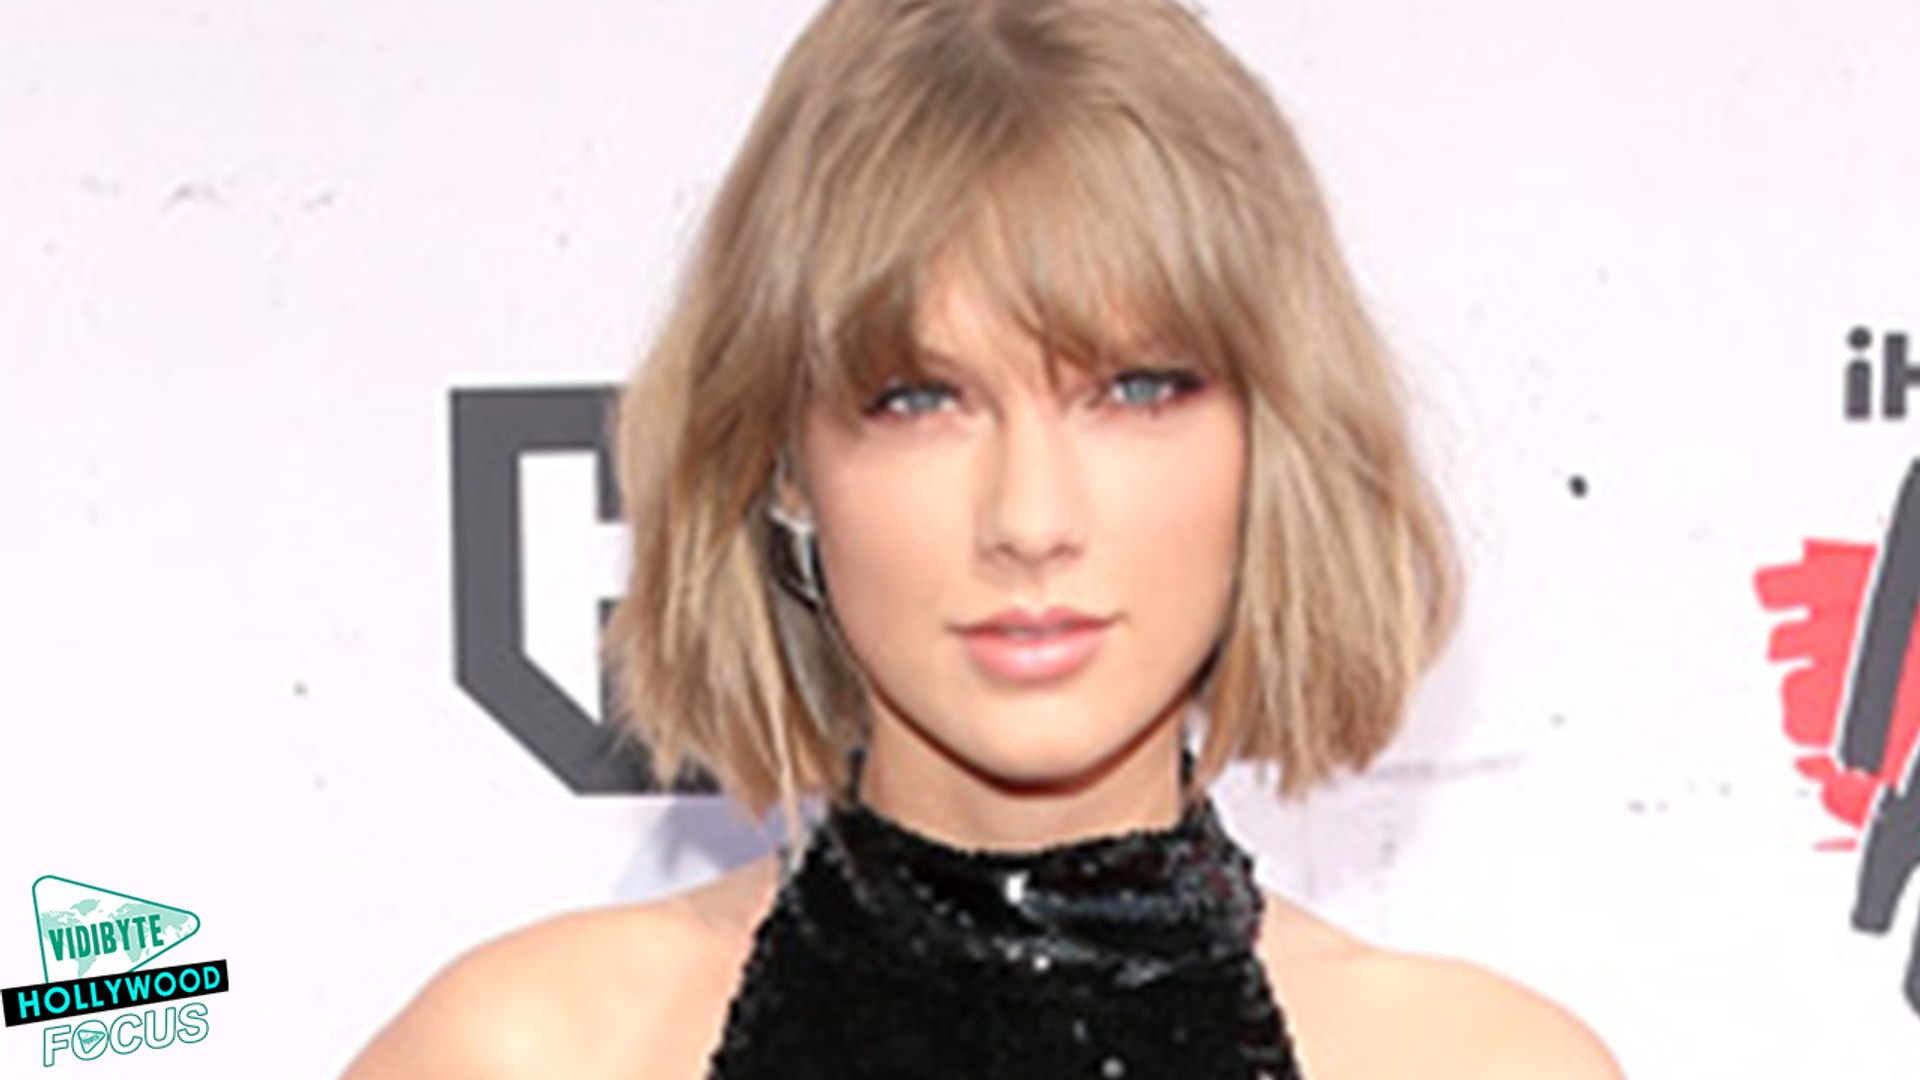 Taylor Swift Releases 'New Romantics' Music Video - Watch